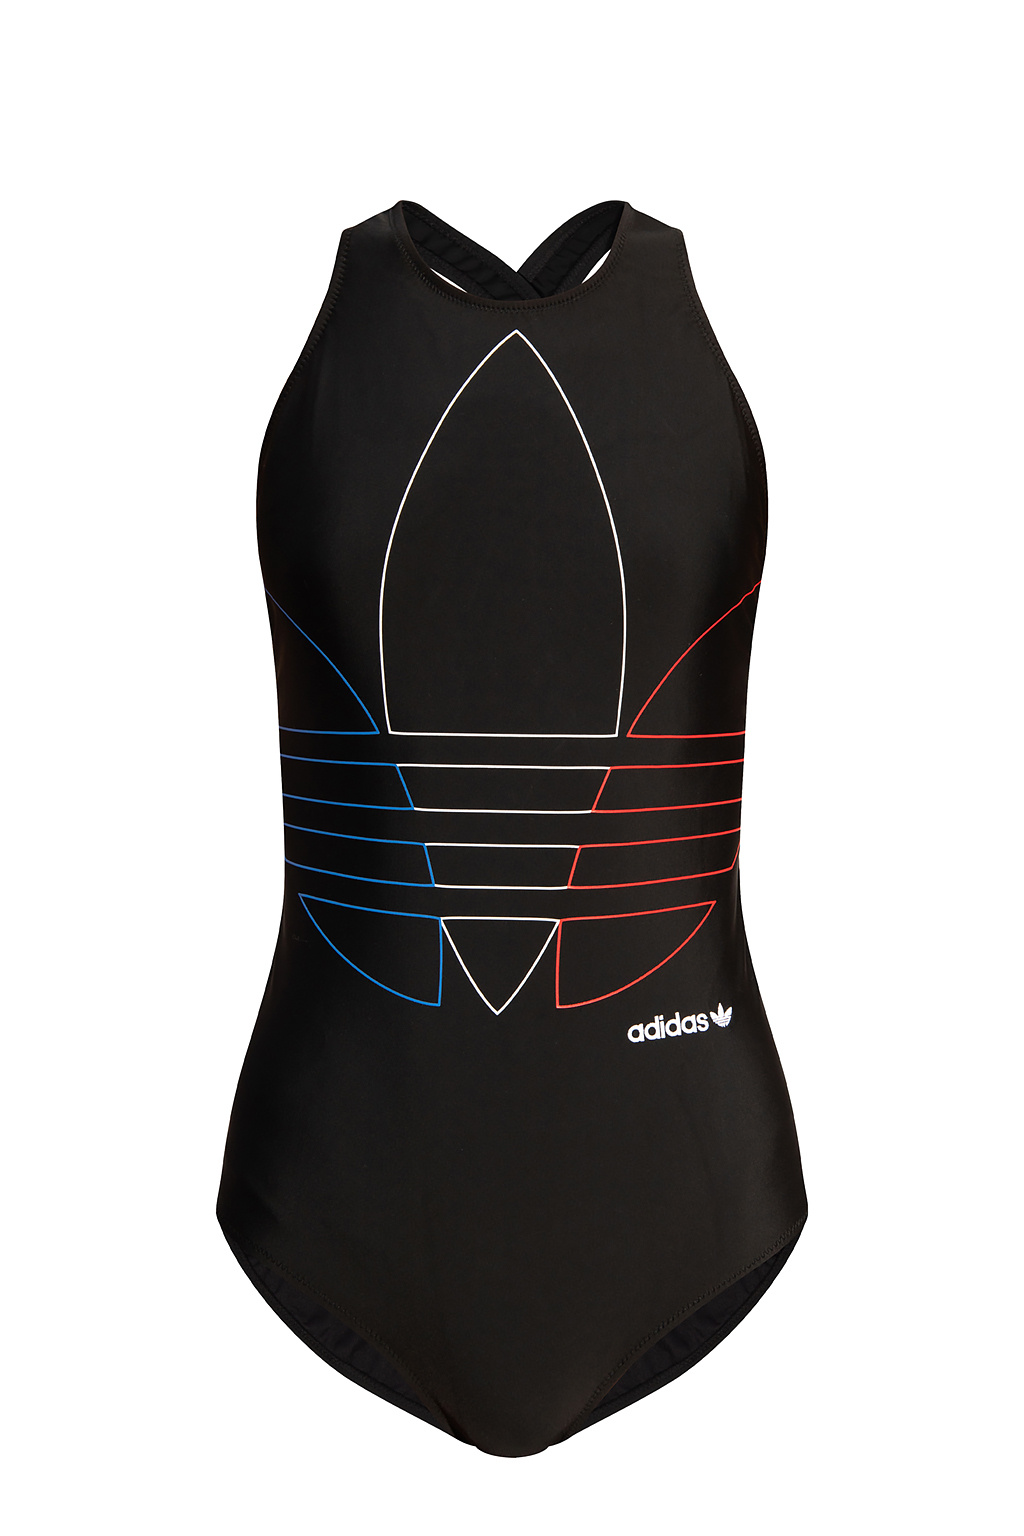 ADIDAS Originals One-piece swimsuit